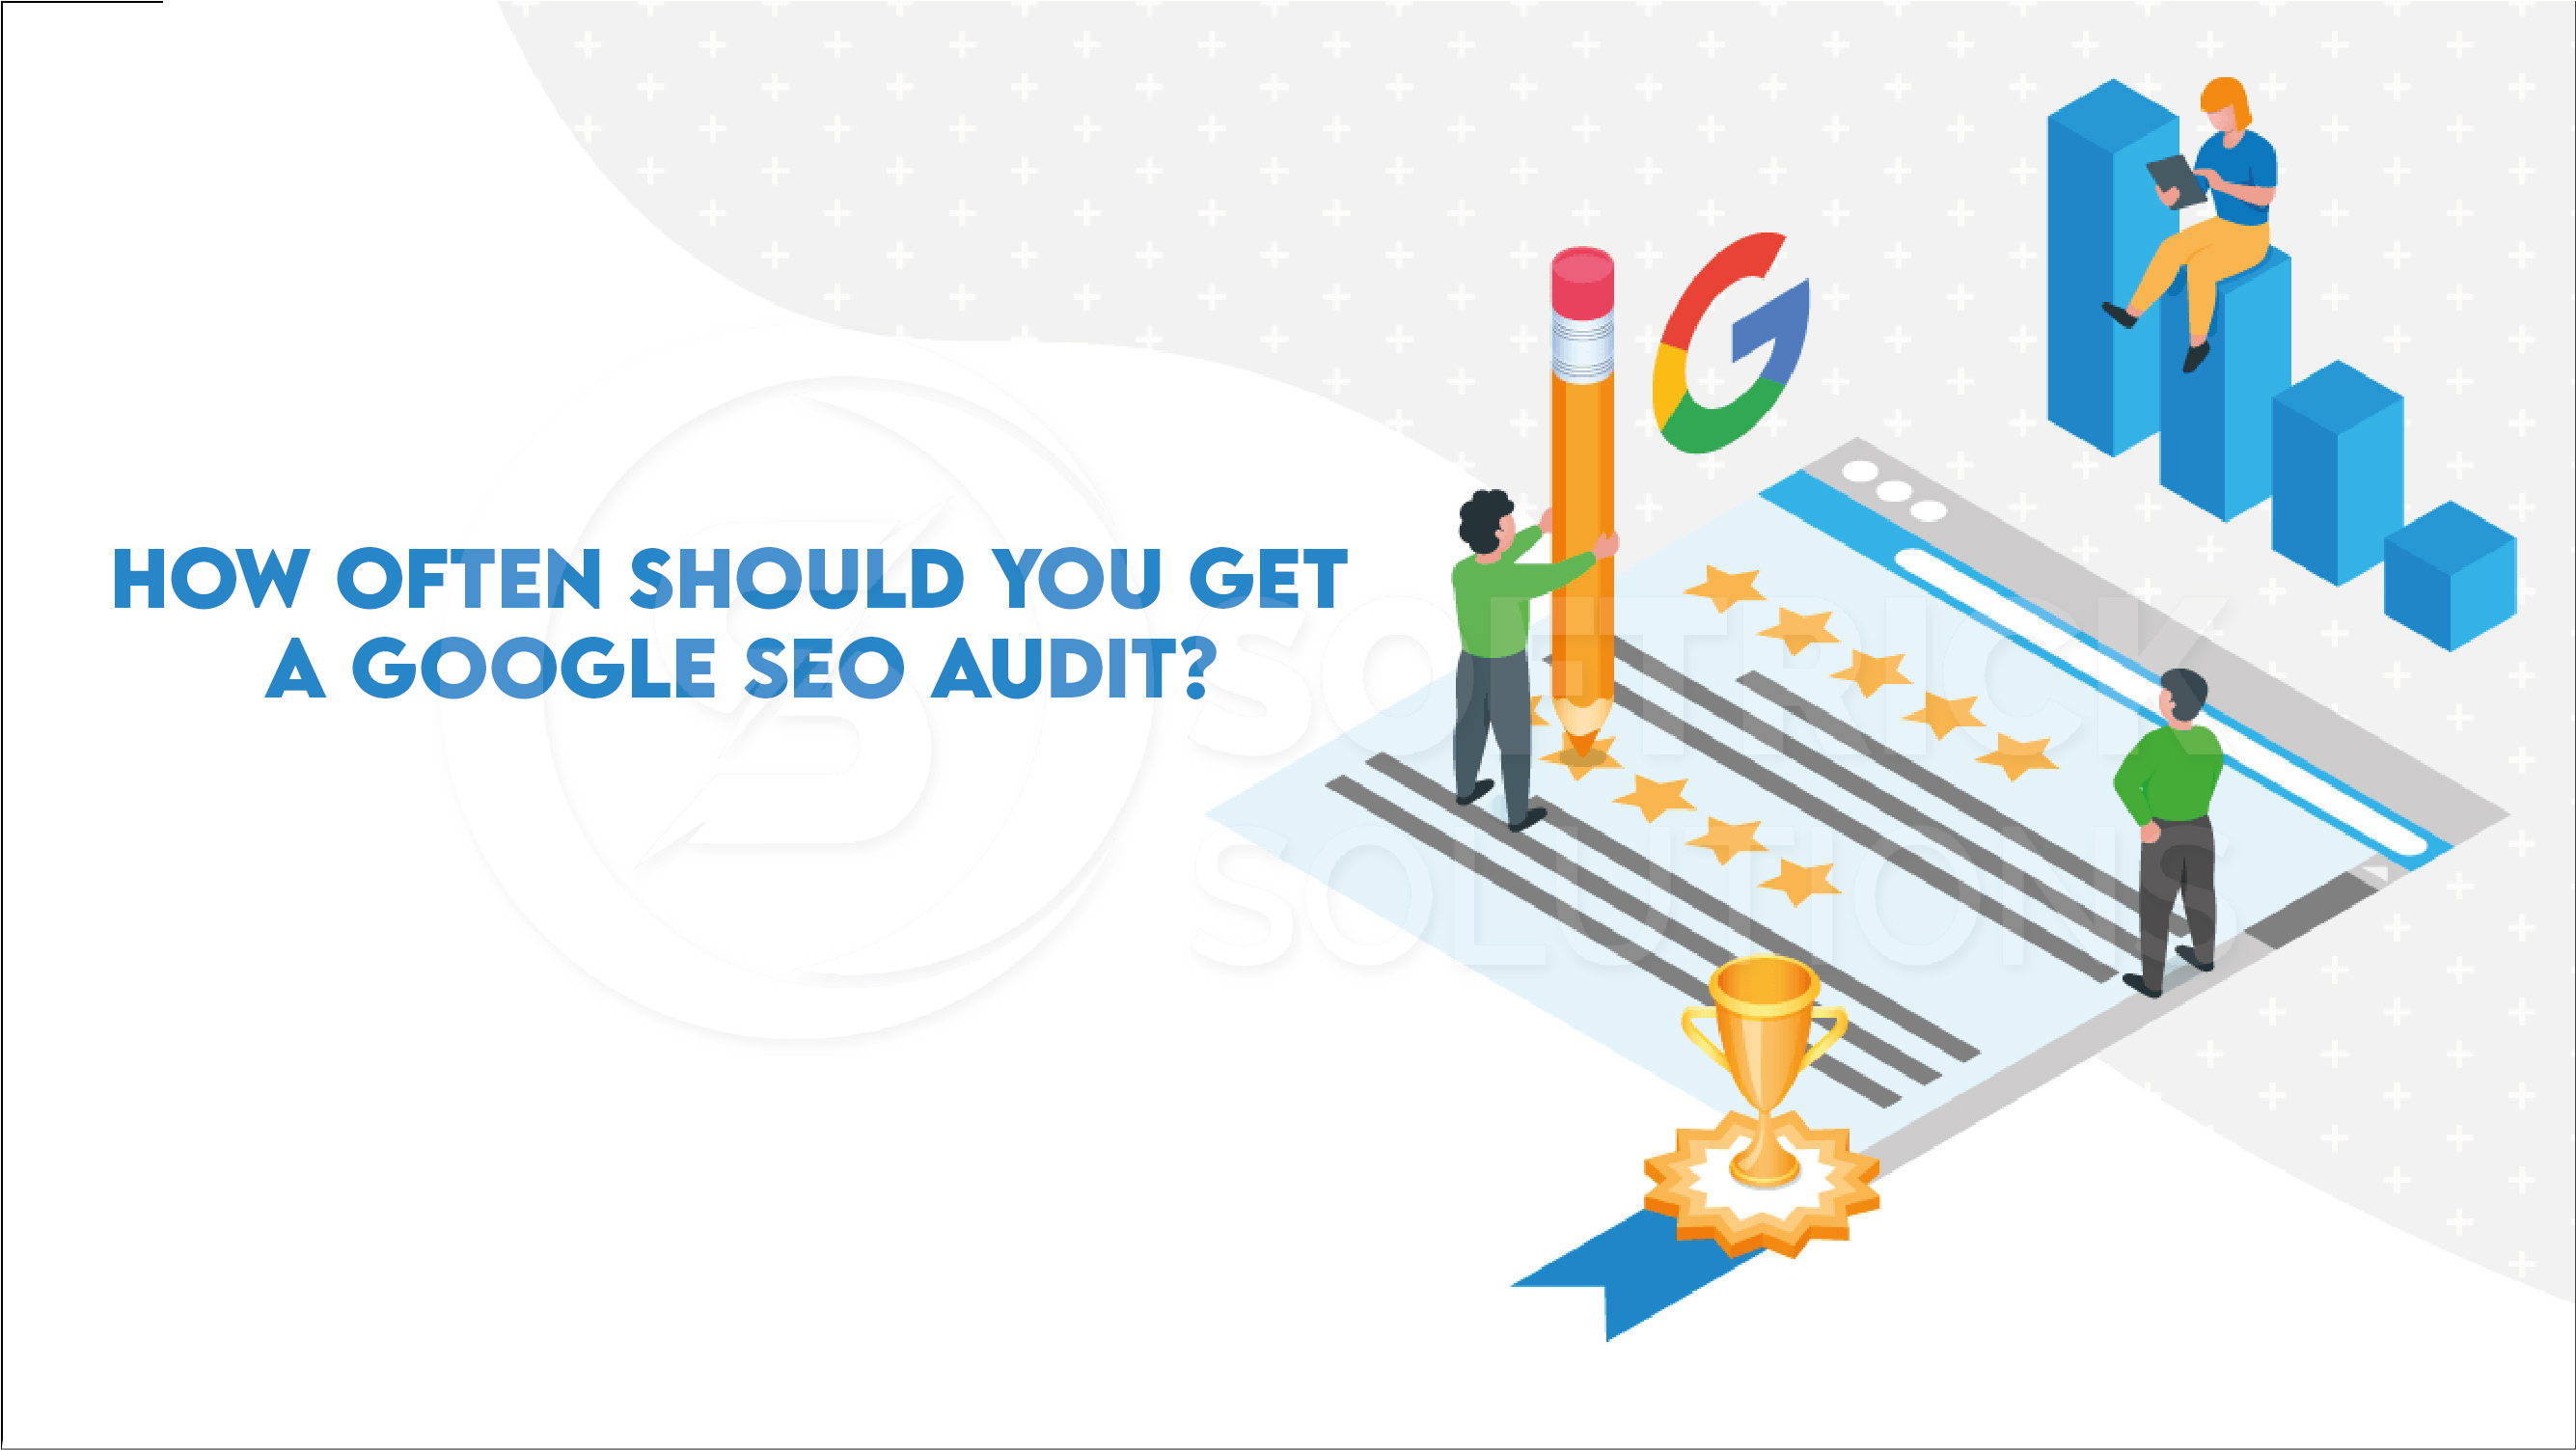 How often should you get a Google SEO audit